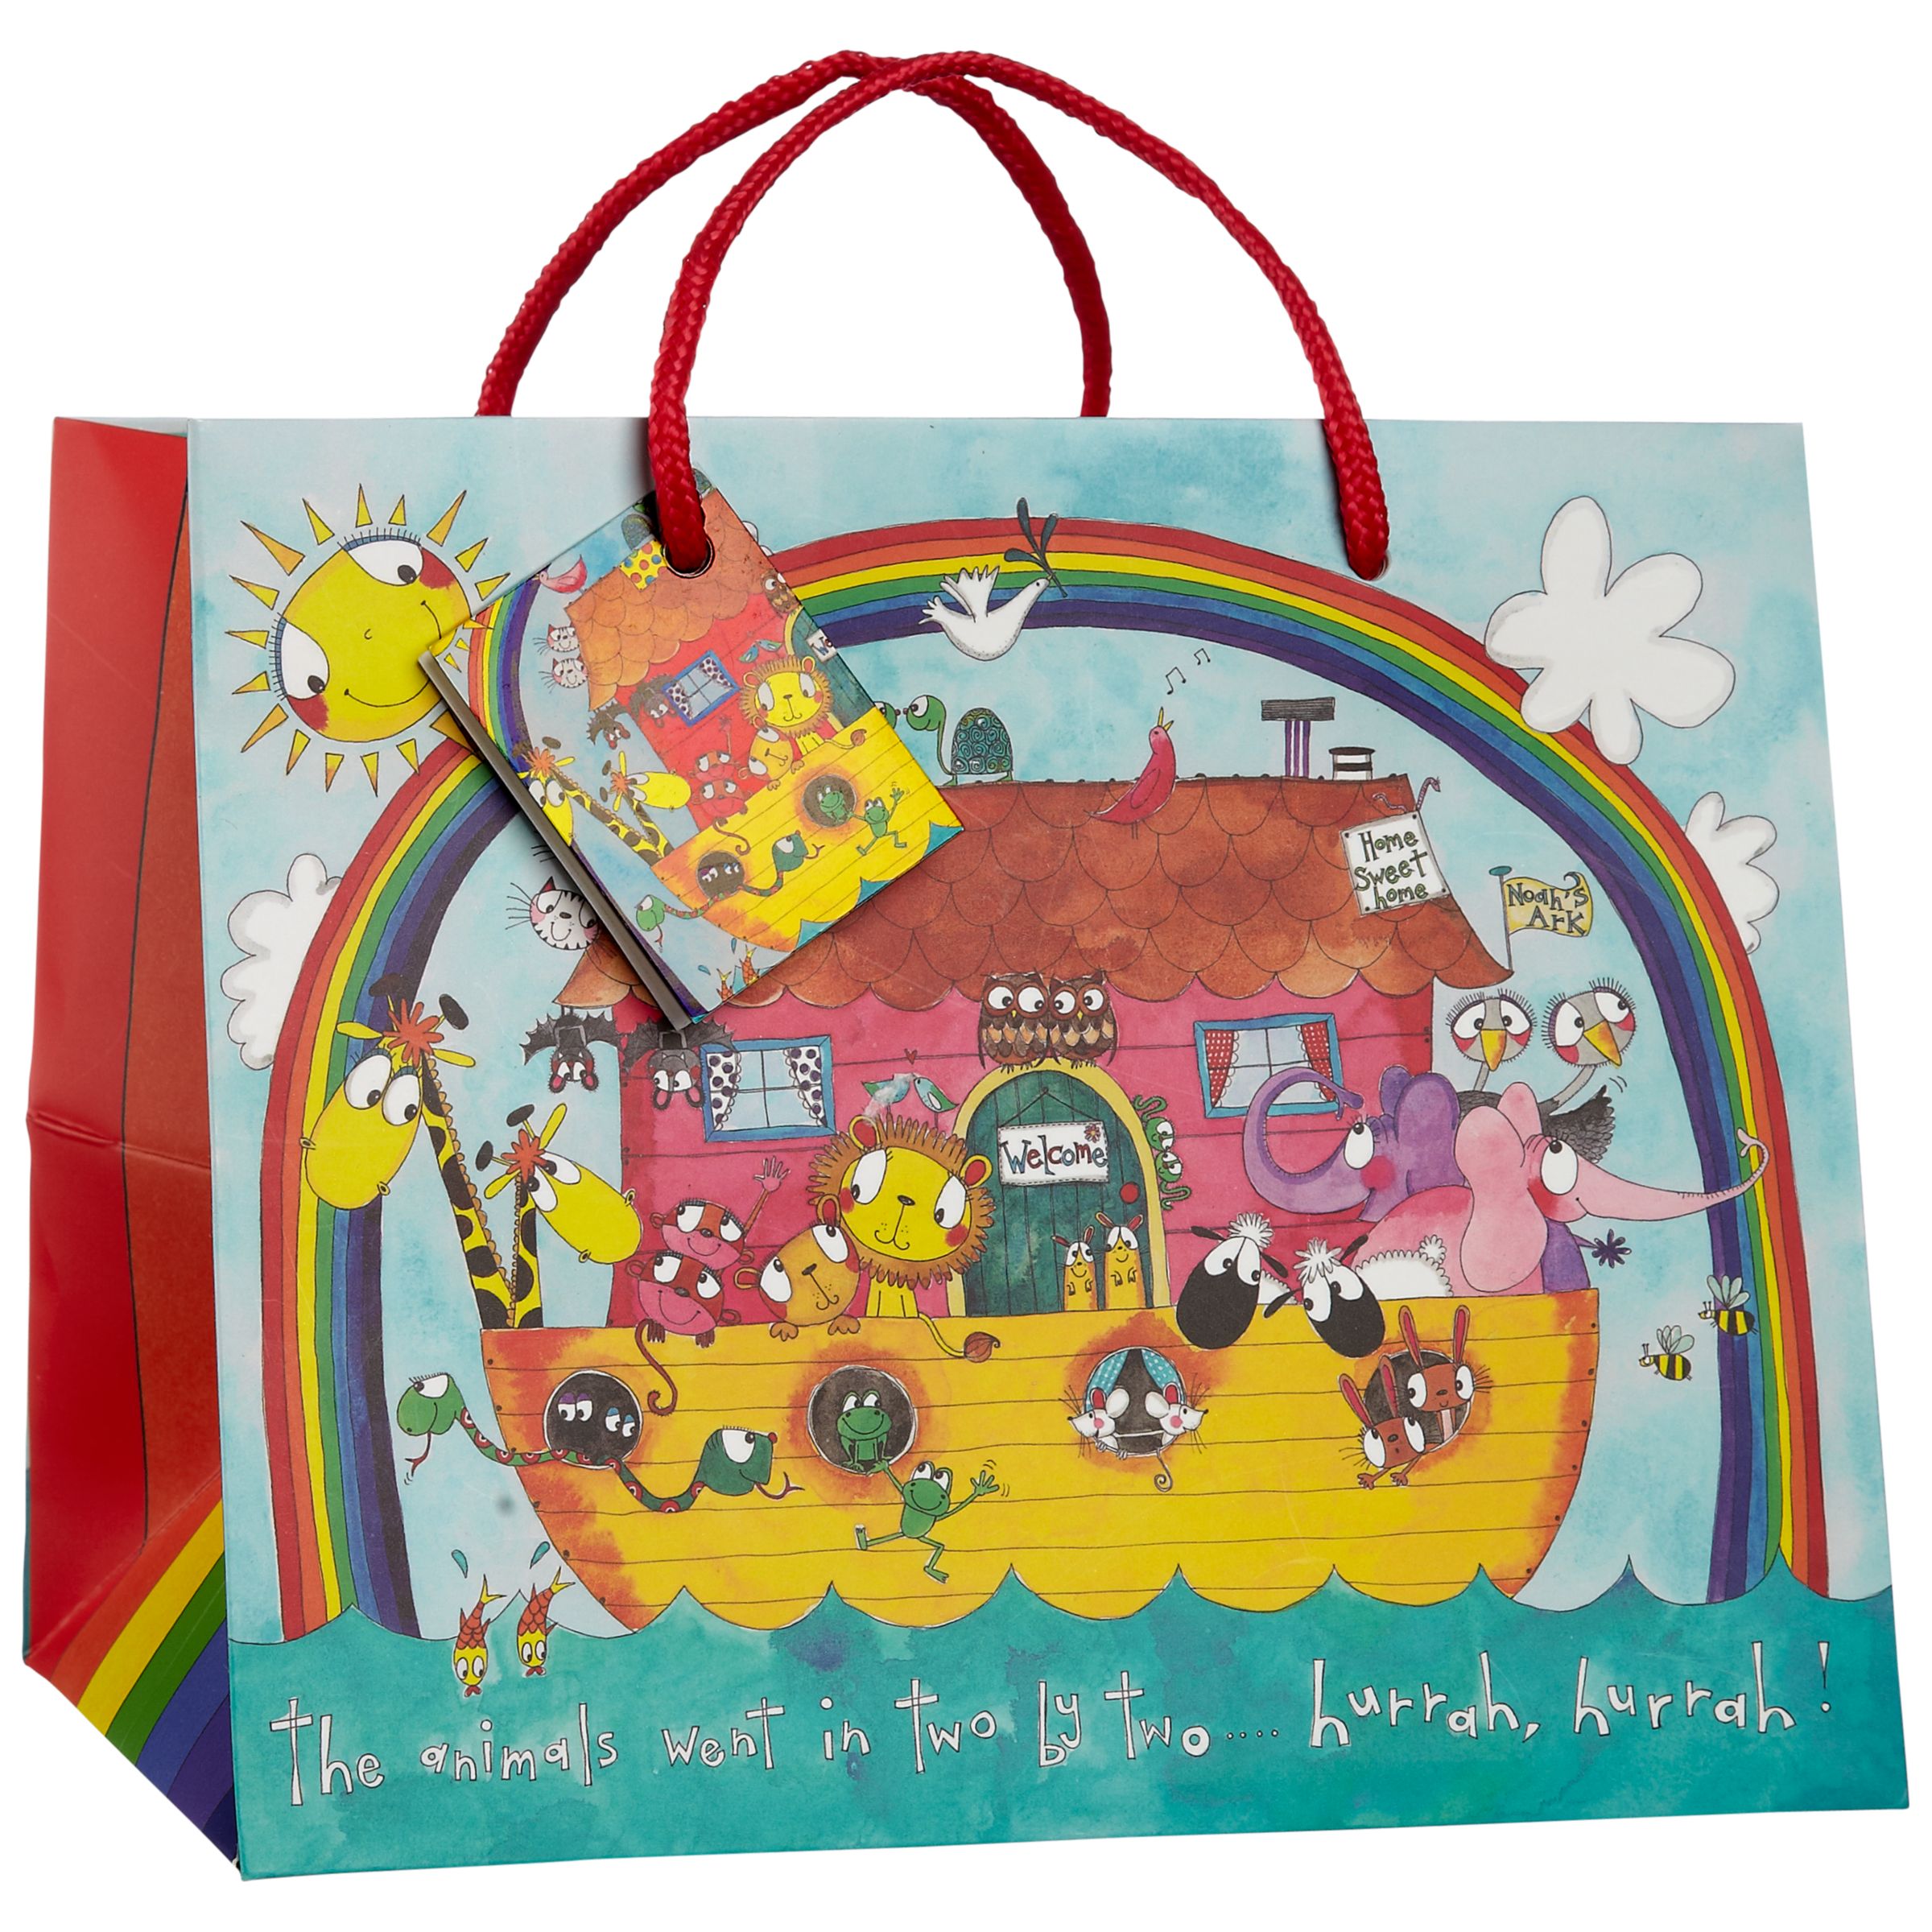 gift for her john lewis
 on ... Designs Animals Noah's Ark Gift Bag, Multi, Small online at John Lewis